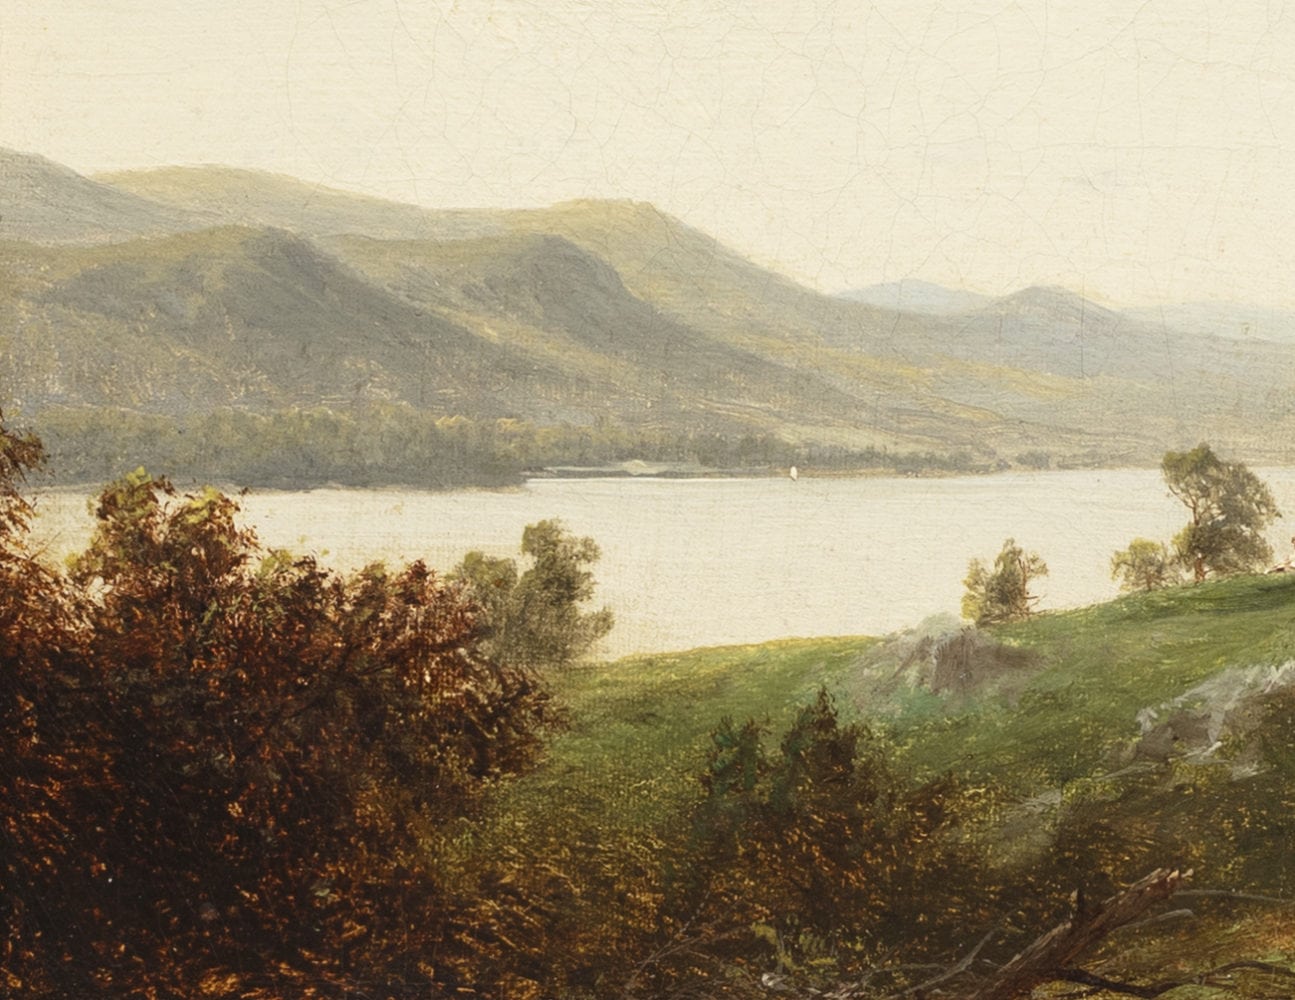 David Johnson, Lake George, Hudson River School landscape painting, detail